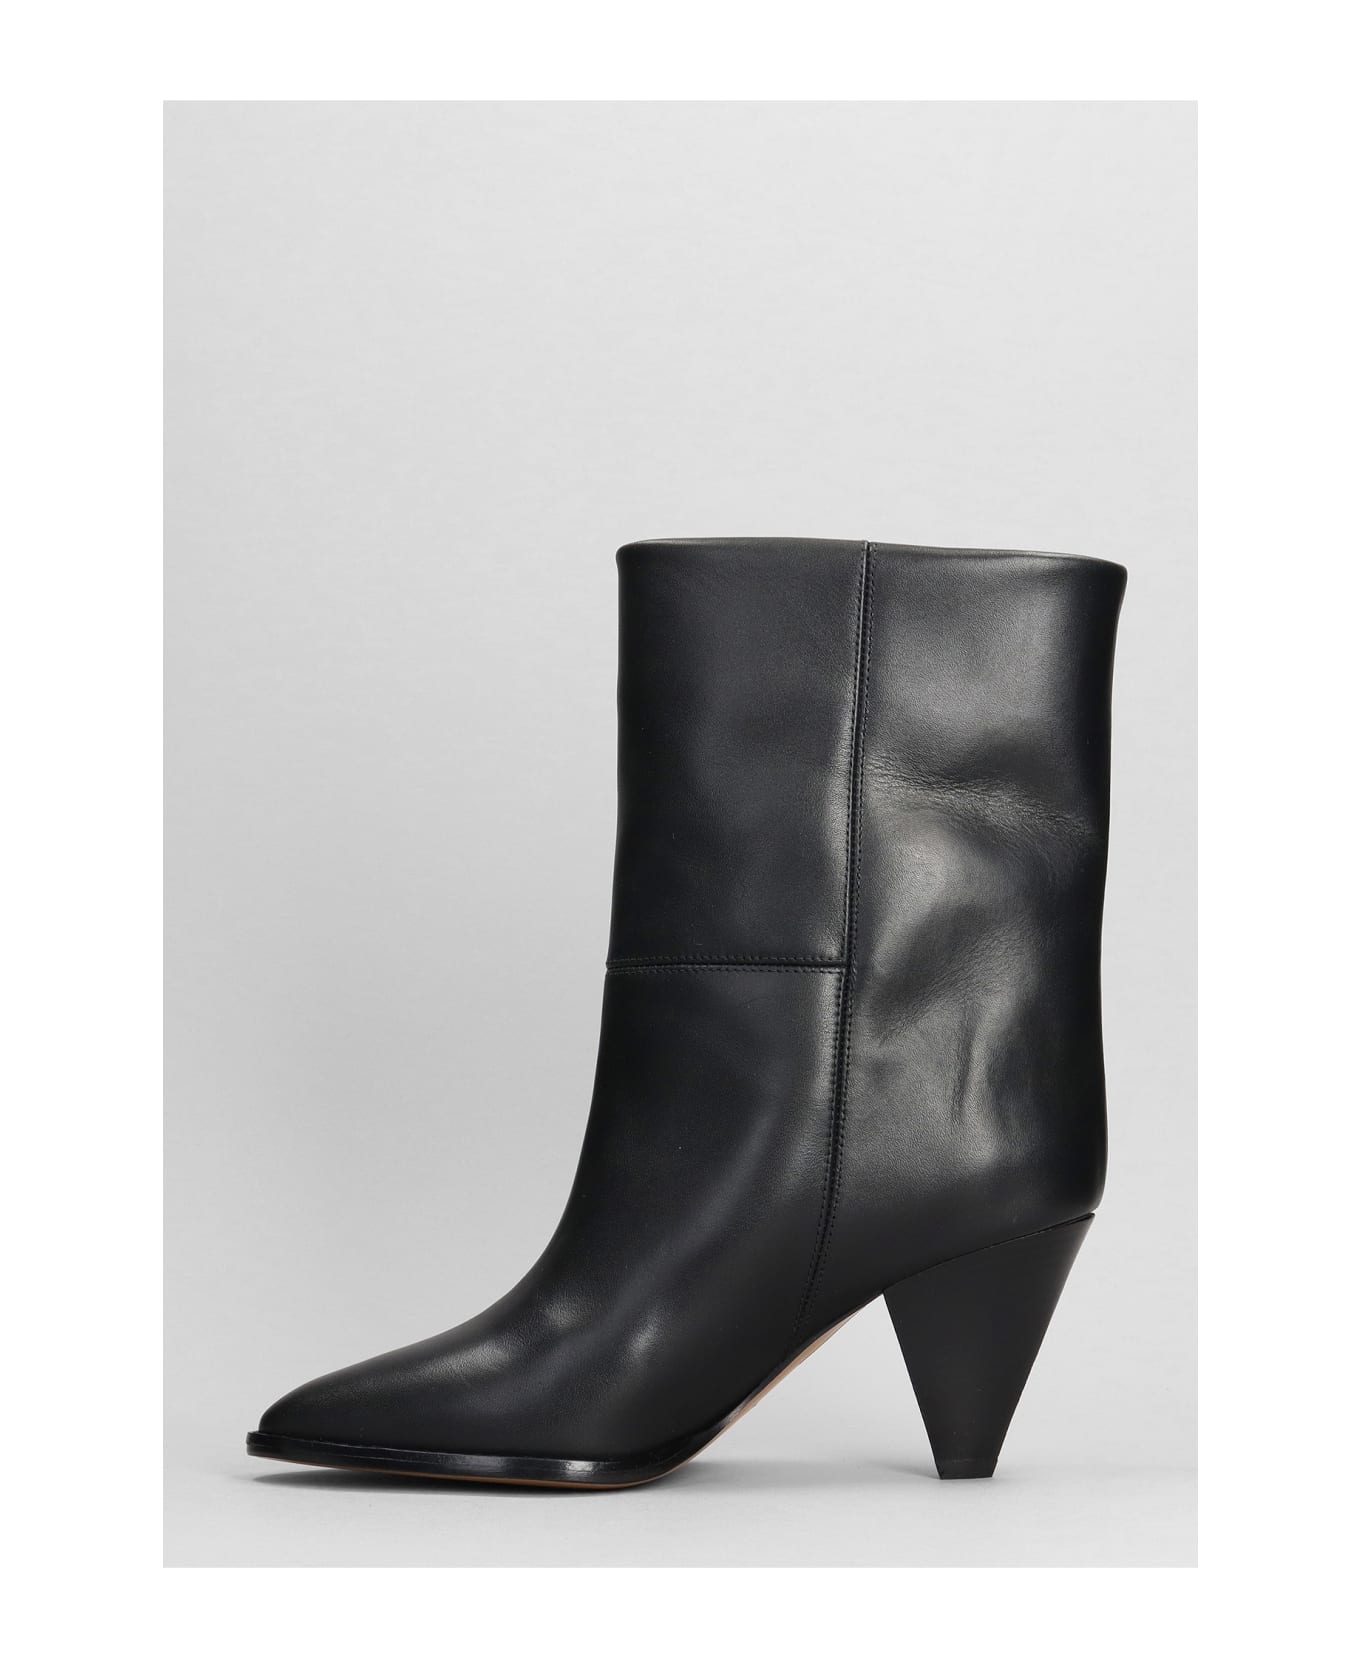 Isabel Marant Rouxa High Heels Ankle Boots - black